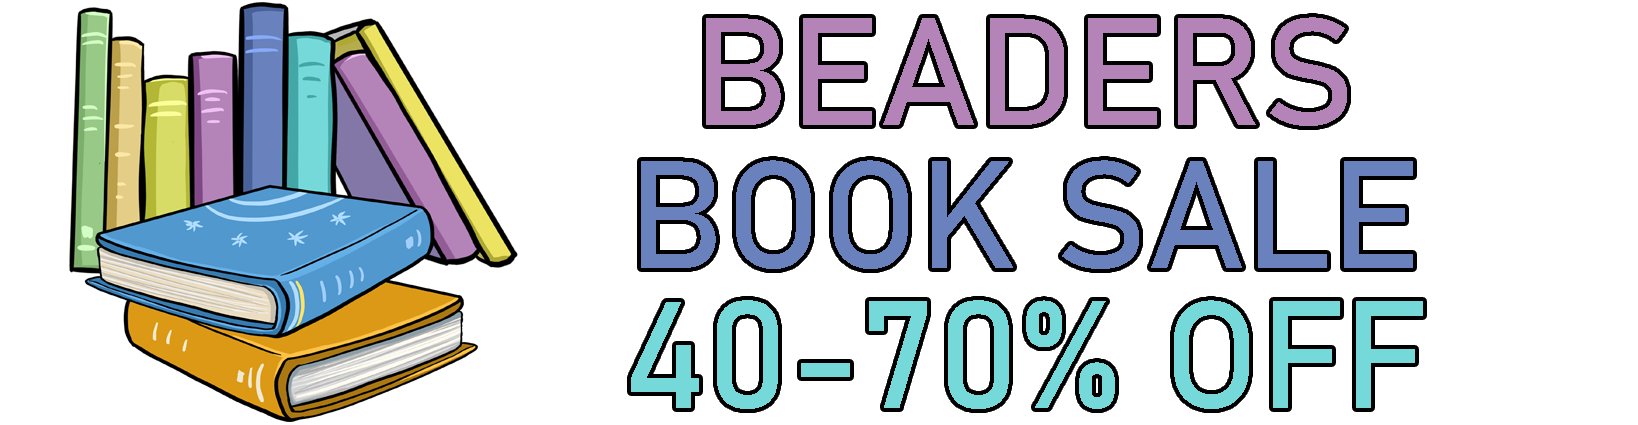 Beaders Book Sale